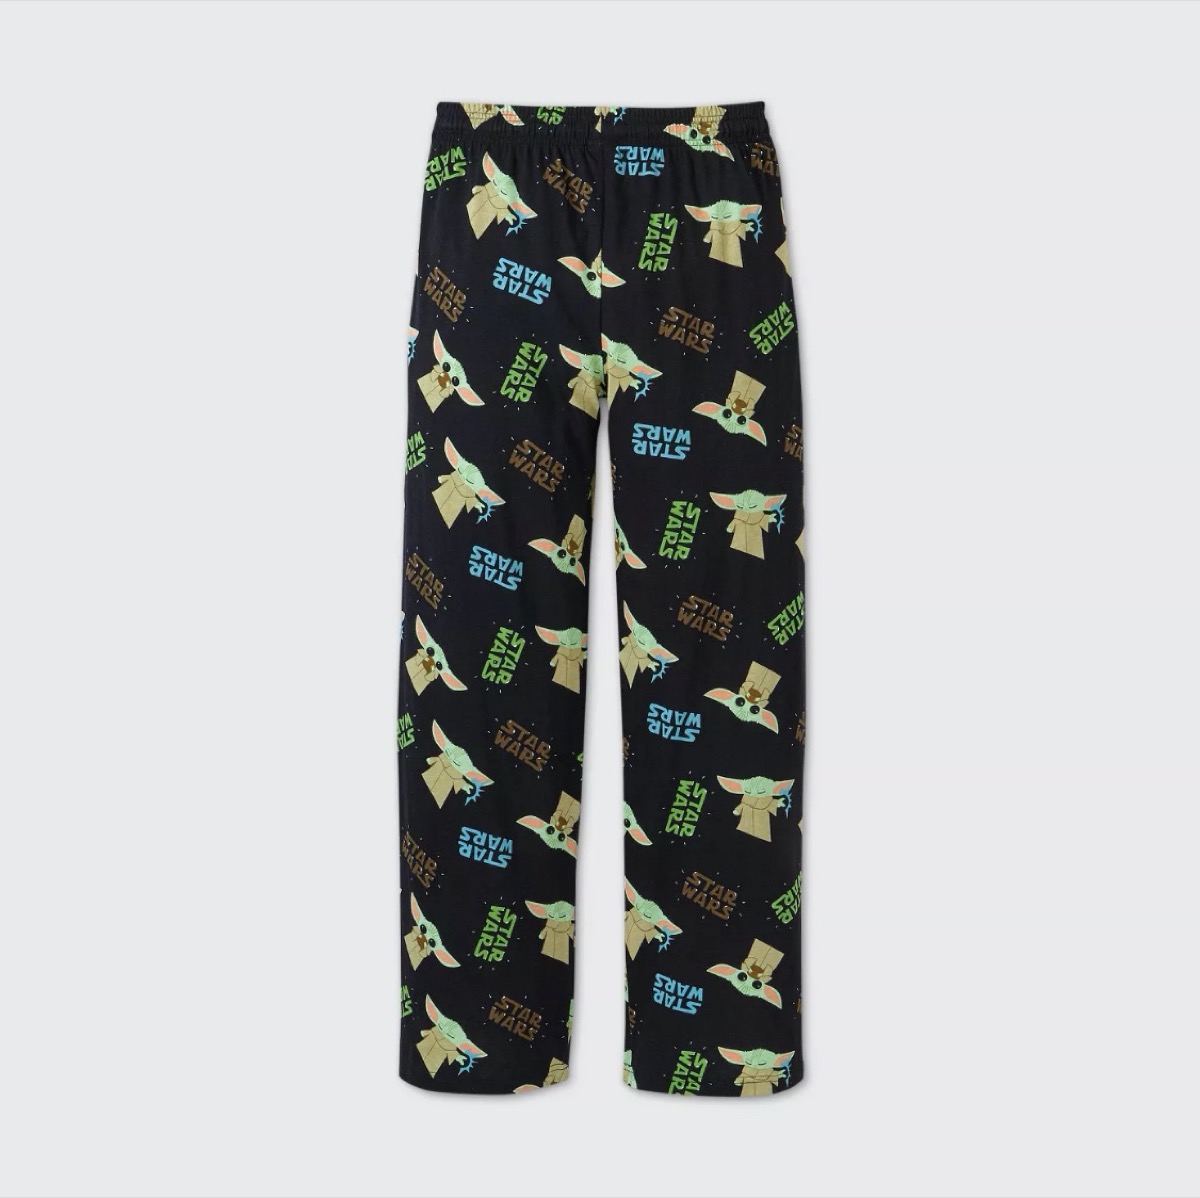 black pajama pants patterned with baby yoda